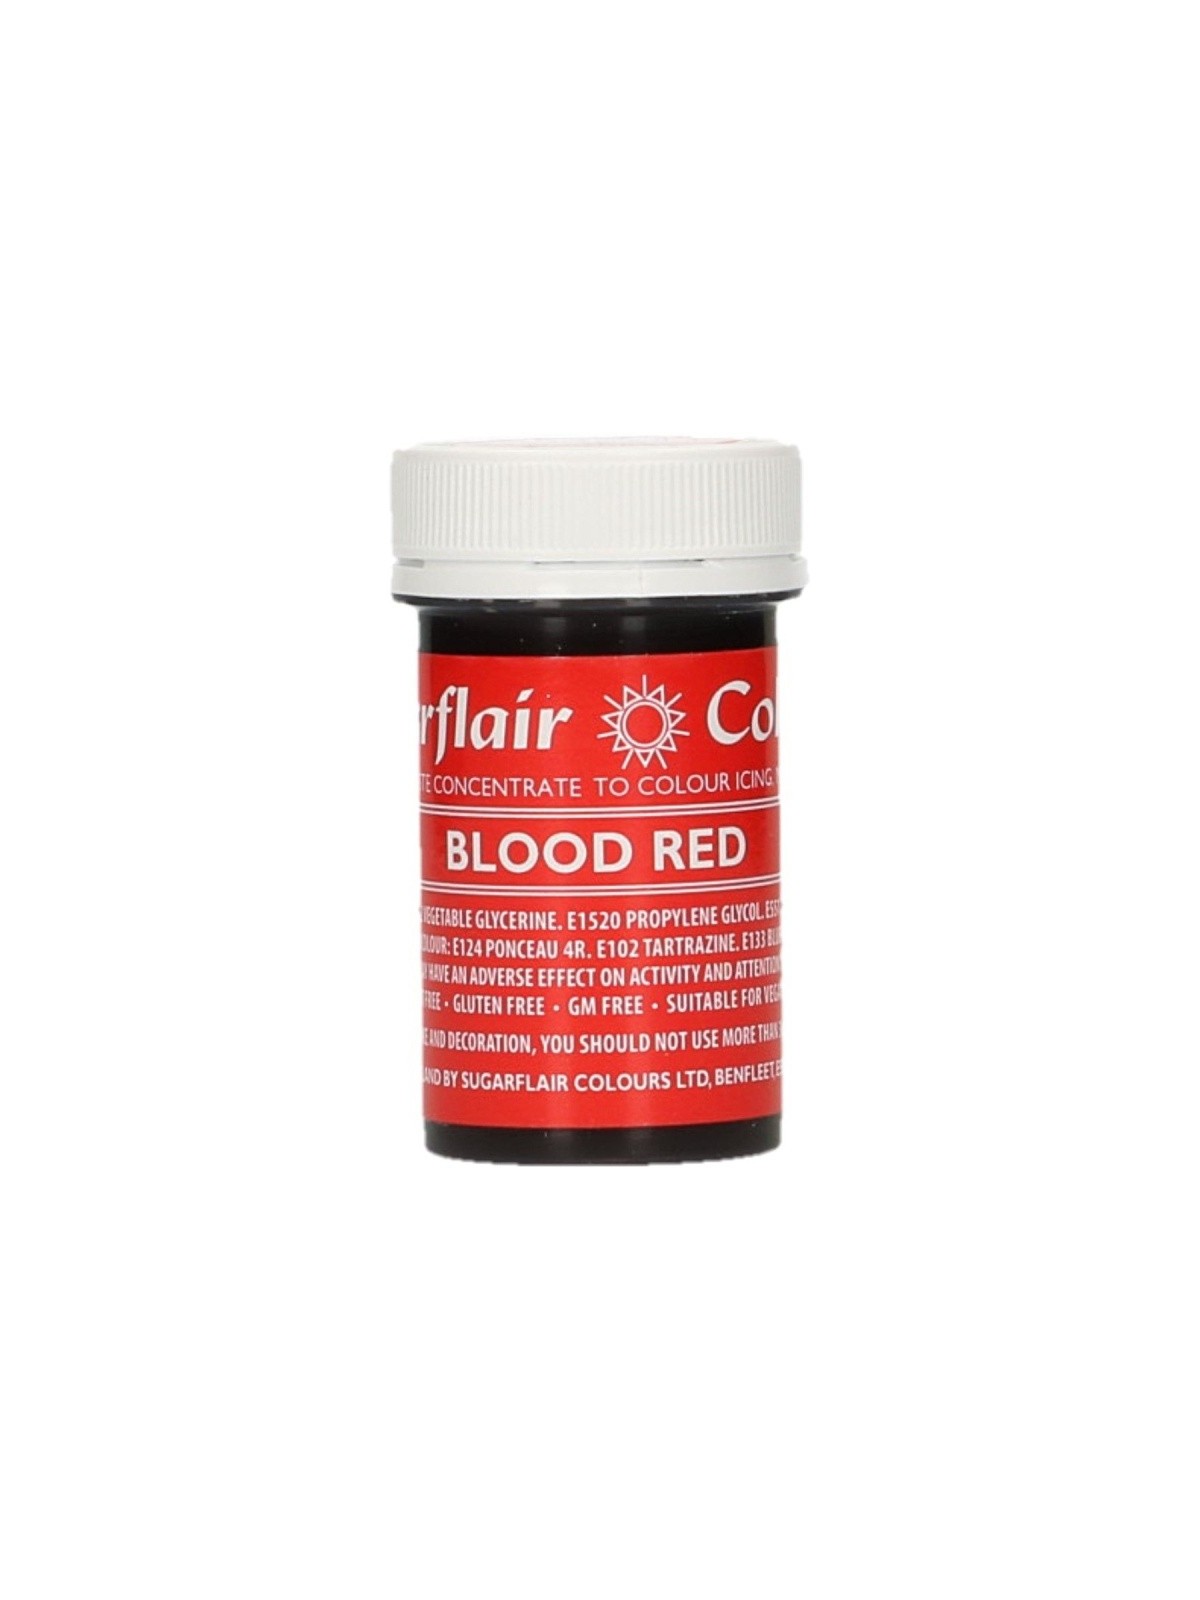 Sugarflair paste colour - gelová barva - červená - Blood red  25g